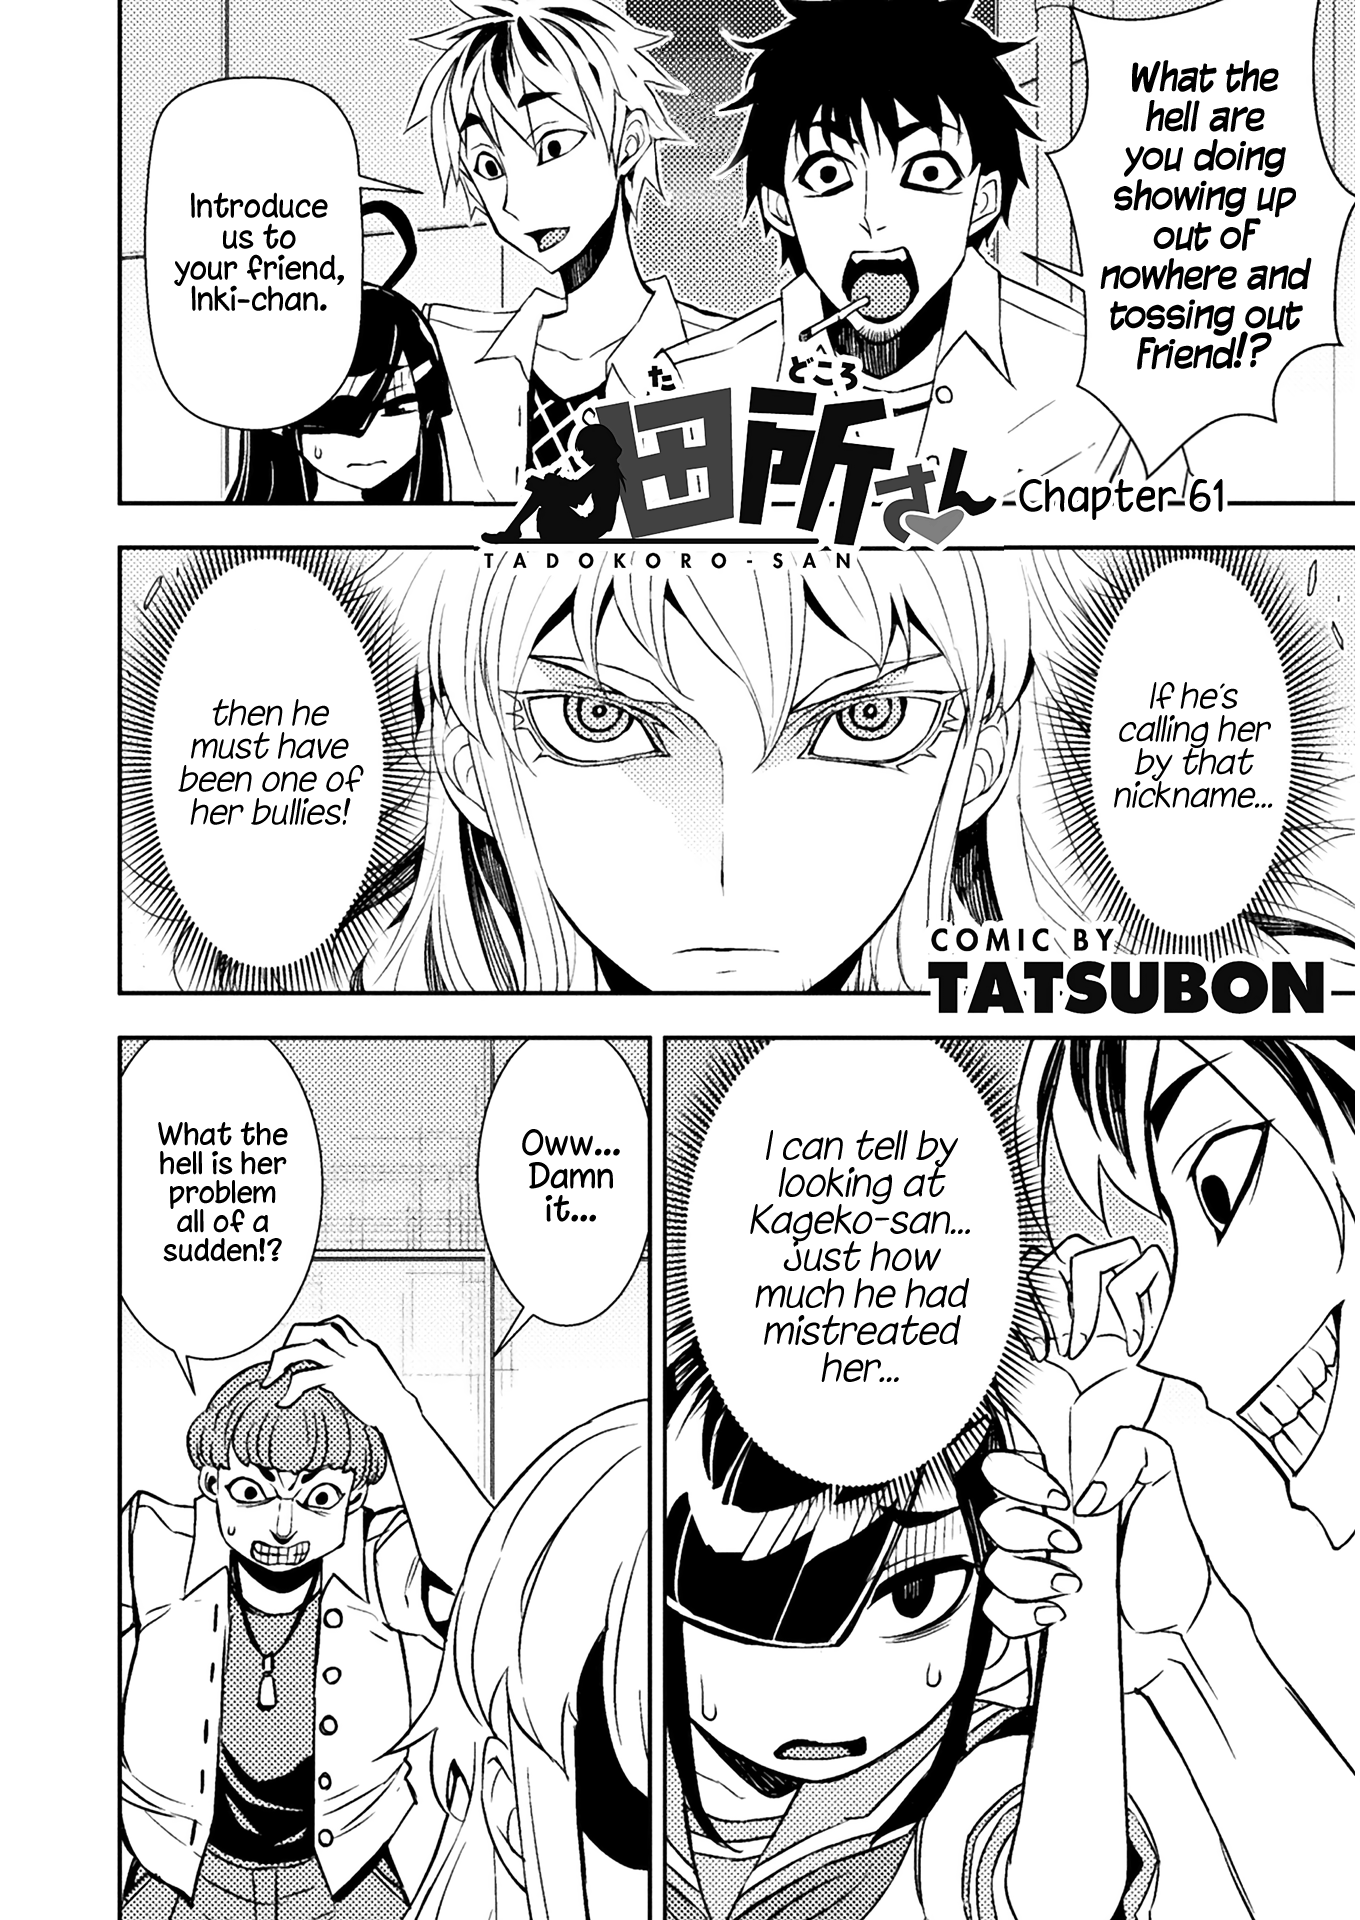 Tadokoro-San (Tatsubon) Chapter 61 #1